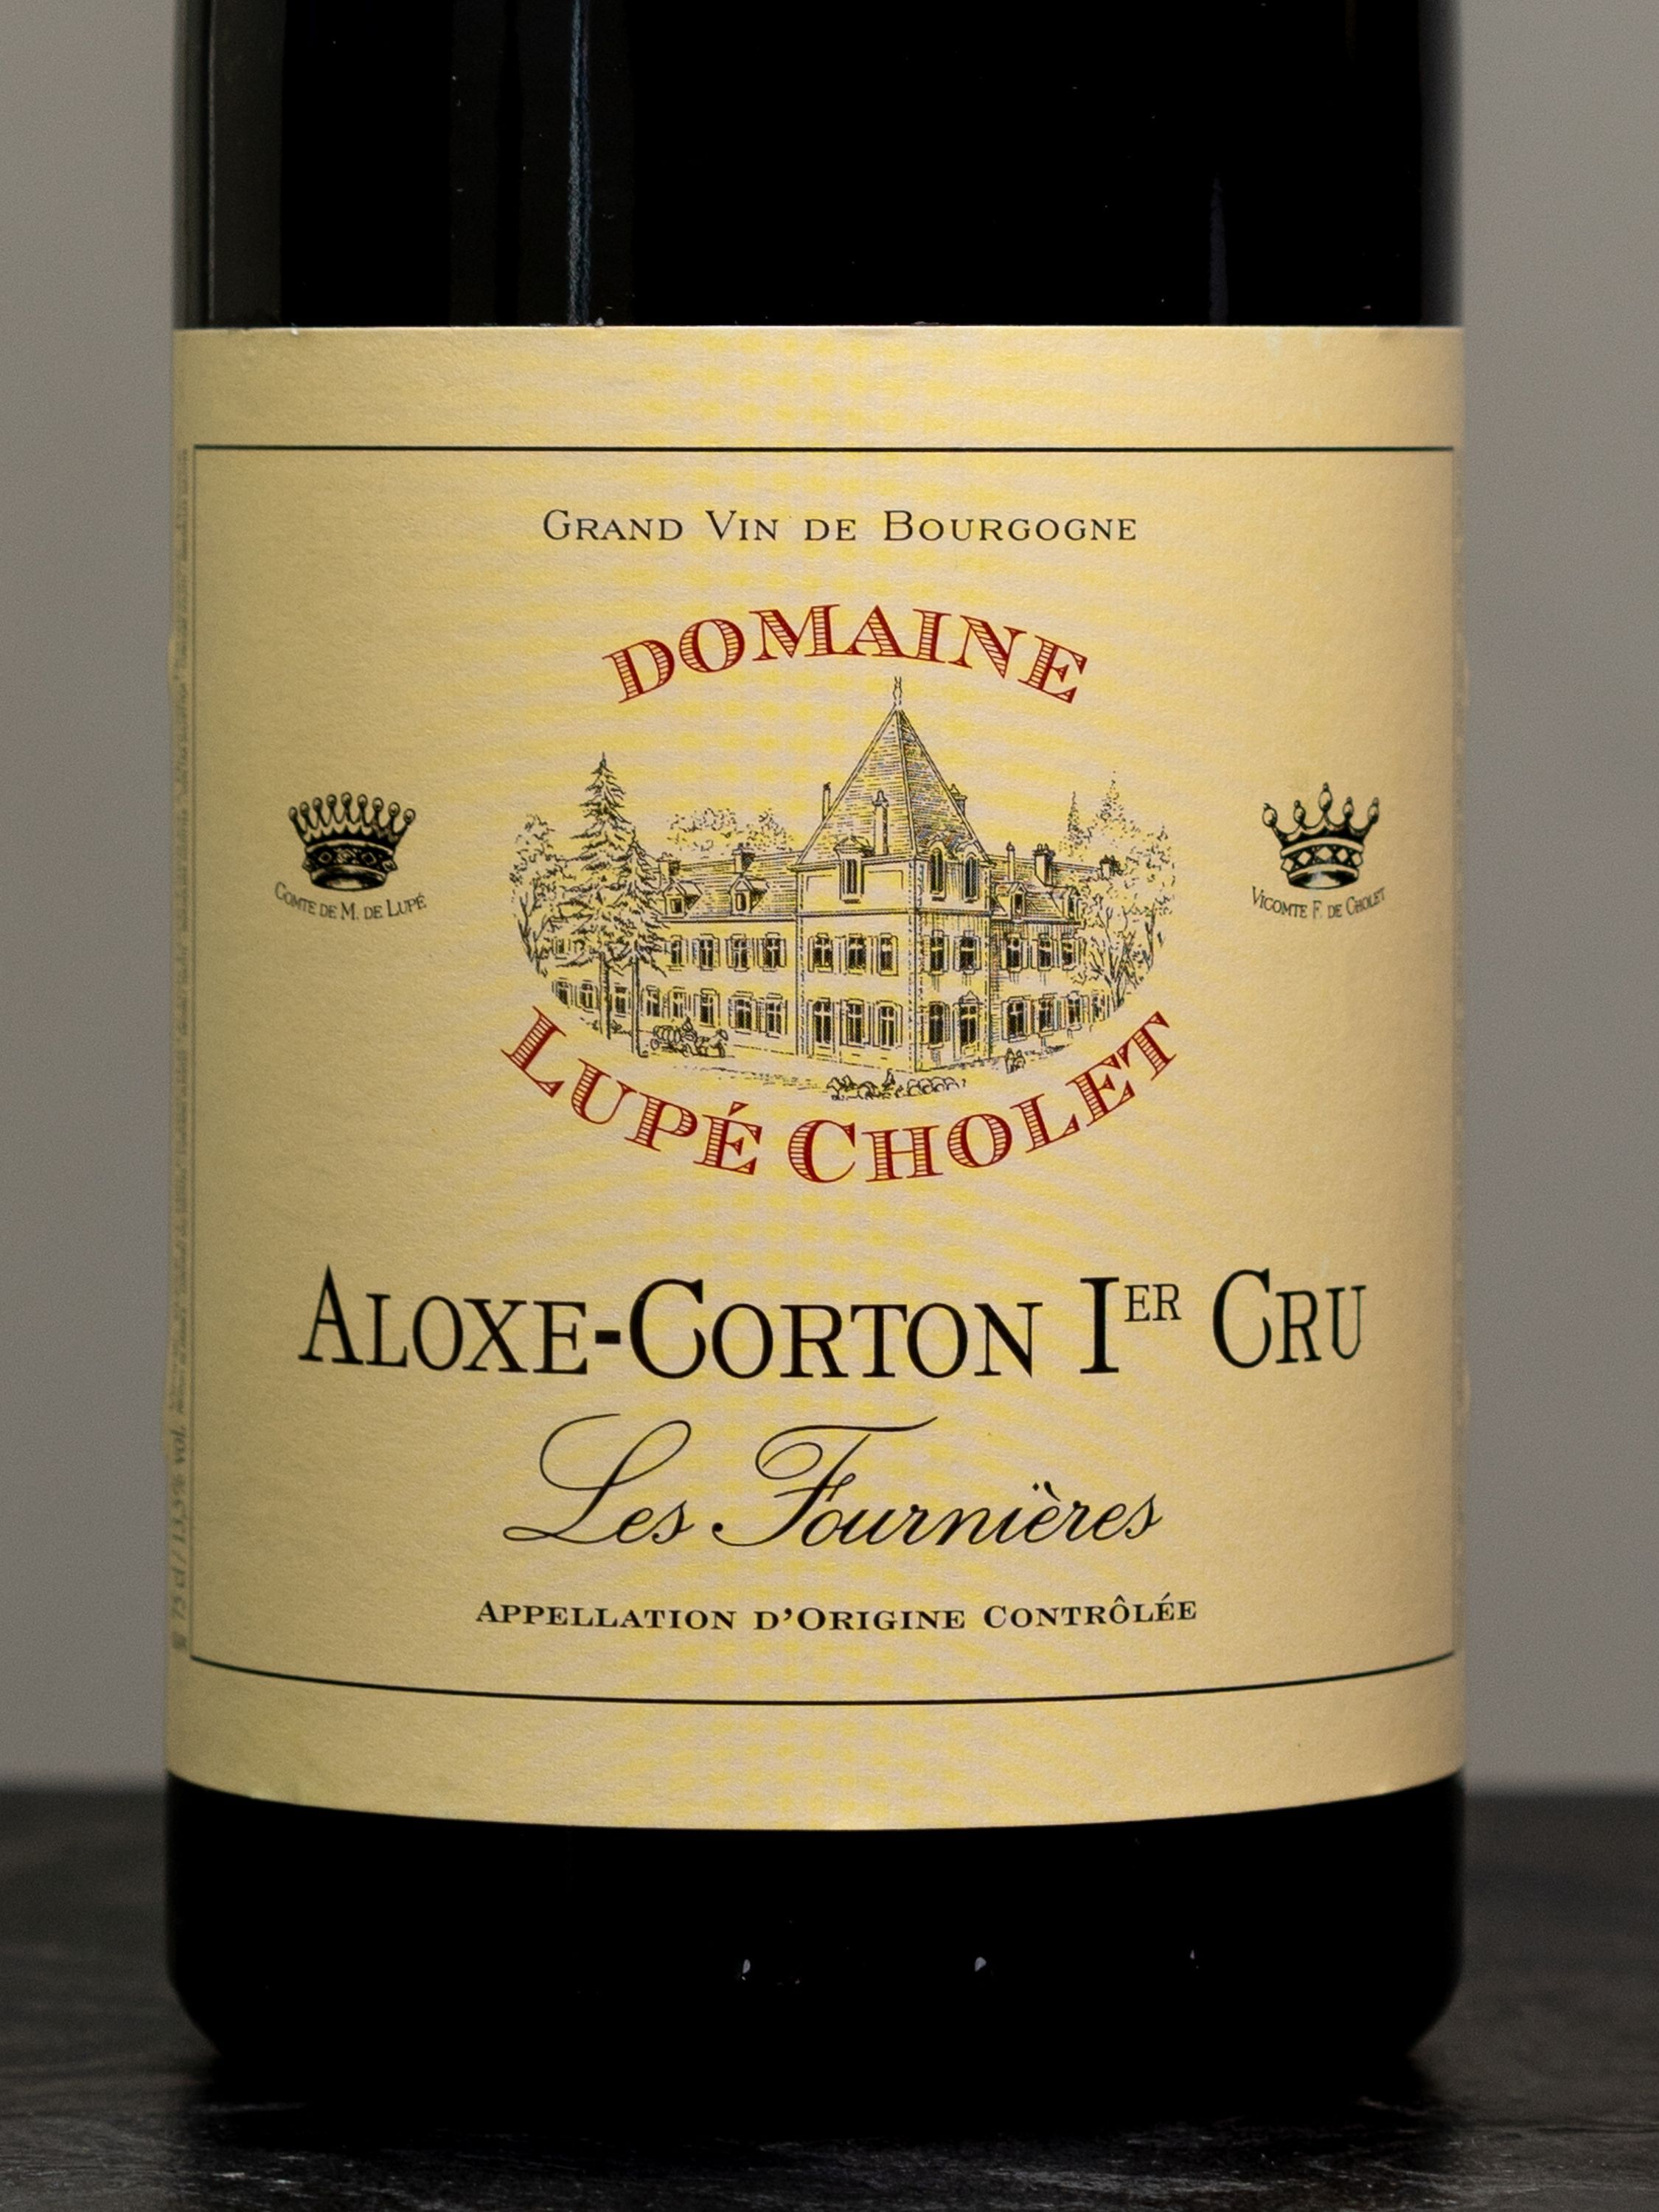 Вино Lupe Cholet Aloxe-Corton 1-er Cru Les Fournieres / Люпе Шоле Алос Кортон Премье Крю Ле Фурньер